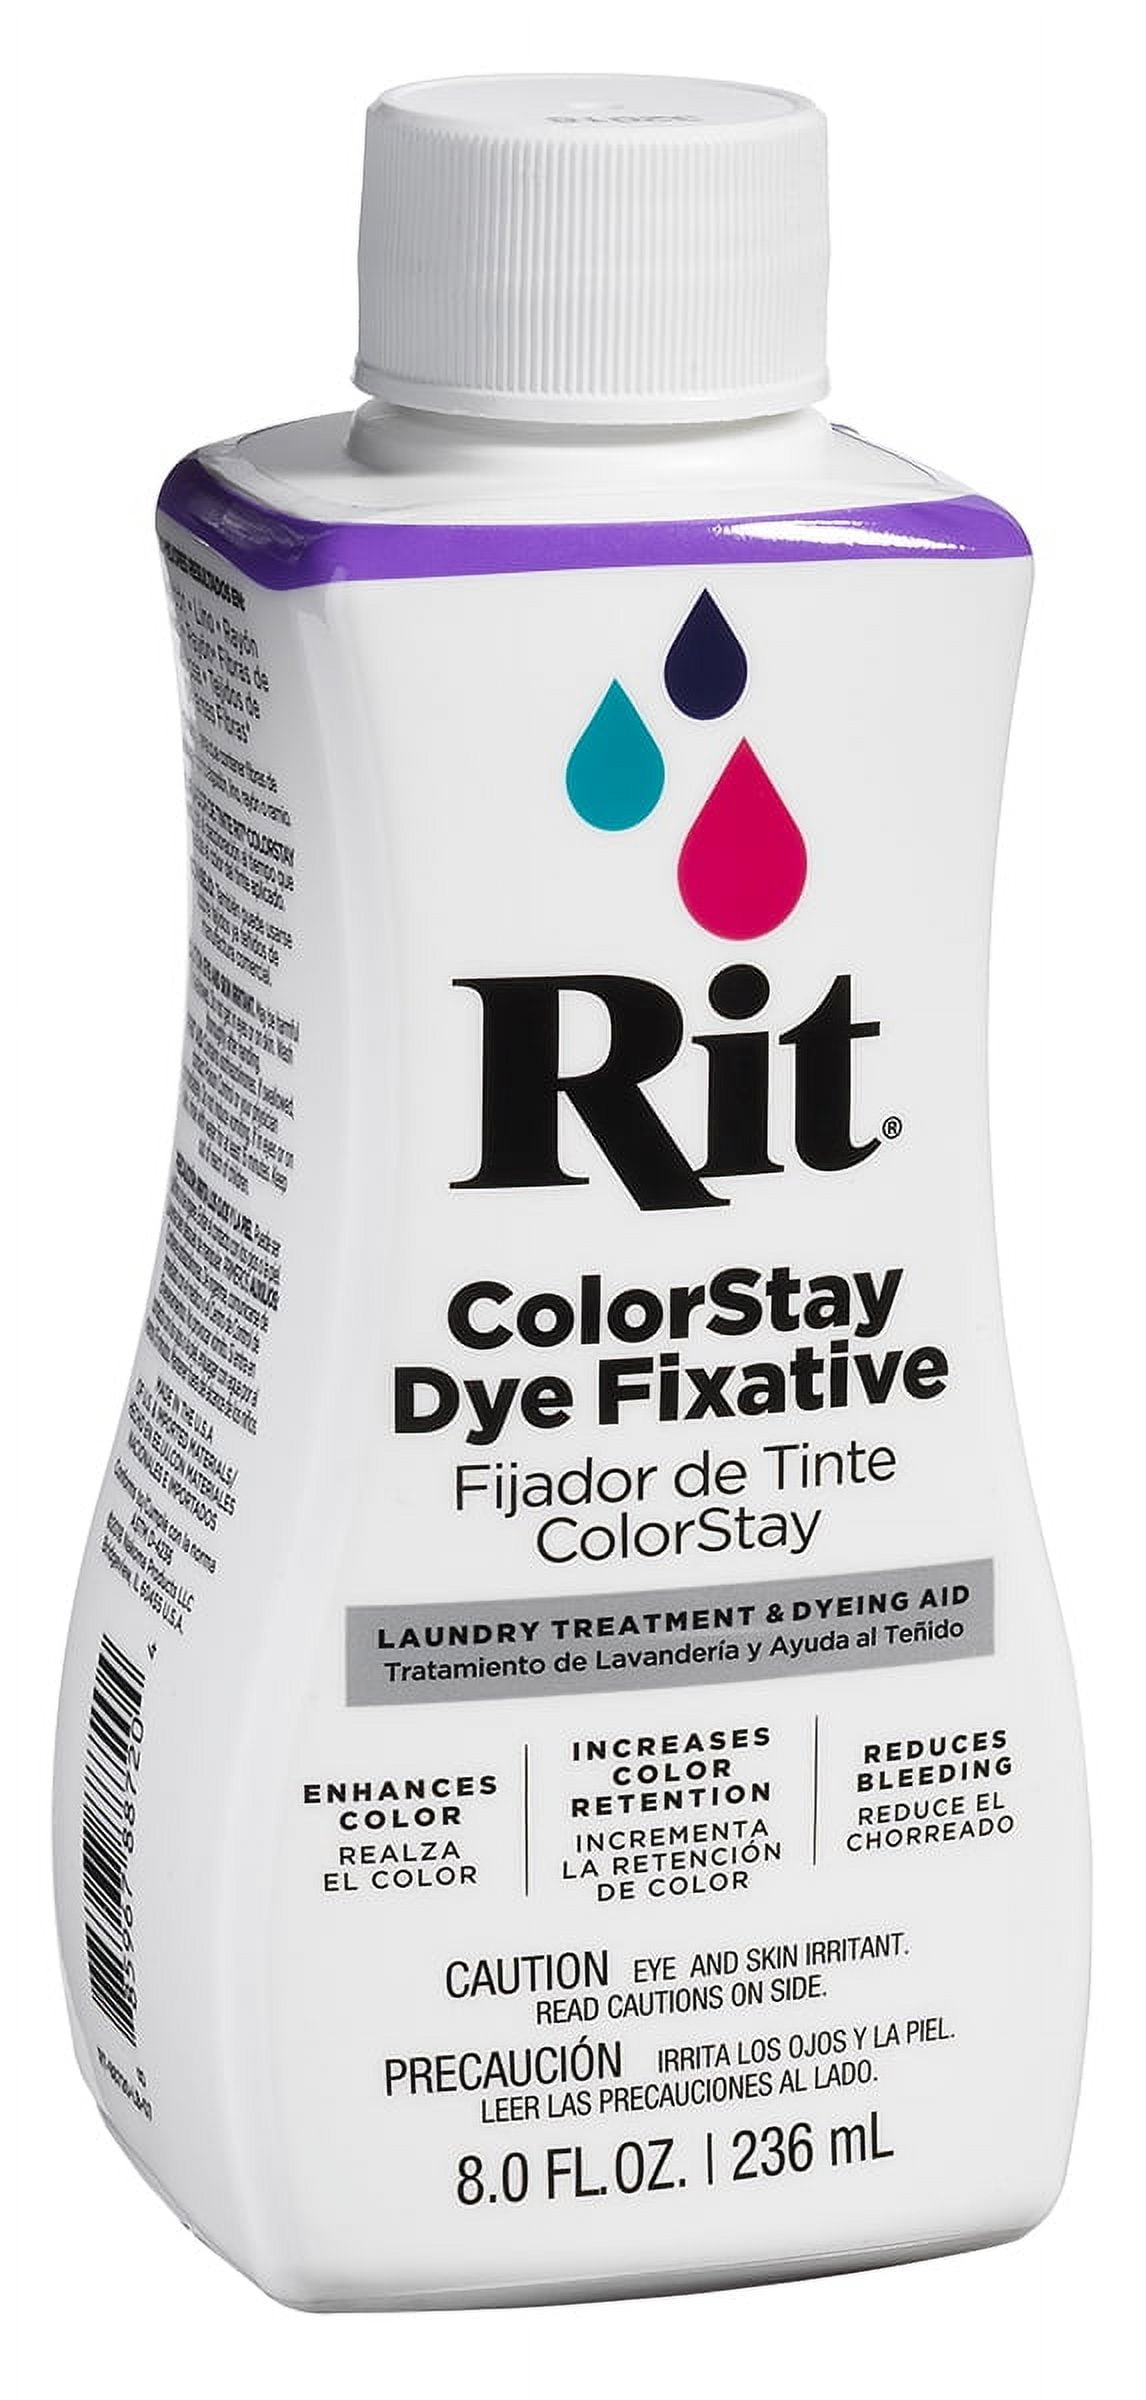 RIT All-Purpose Liquid Dye & ColorStay Dye Fixative Bundle, 53 Color  Options